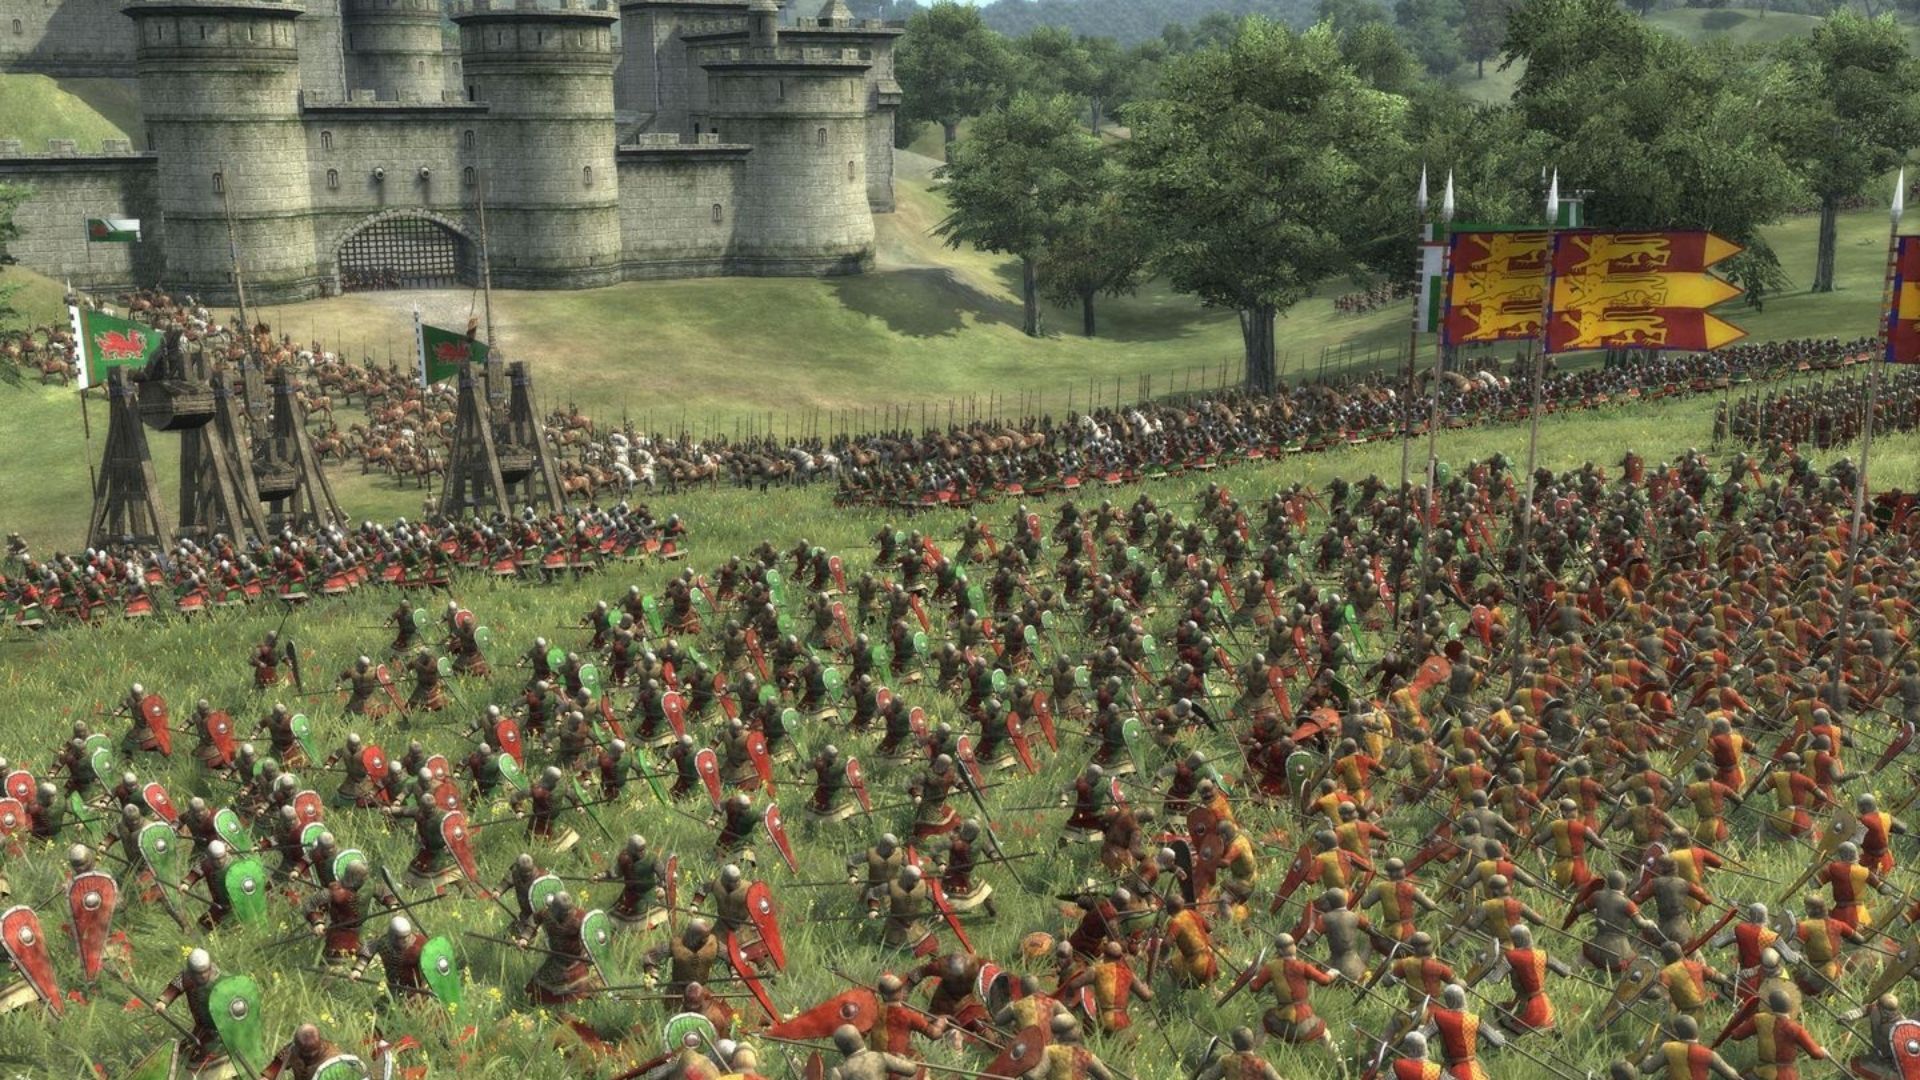 Medieval 2: Total War Review - GameSpot